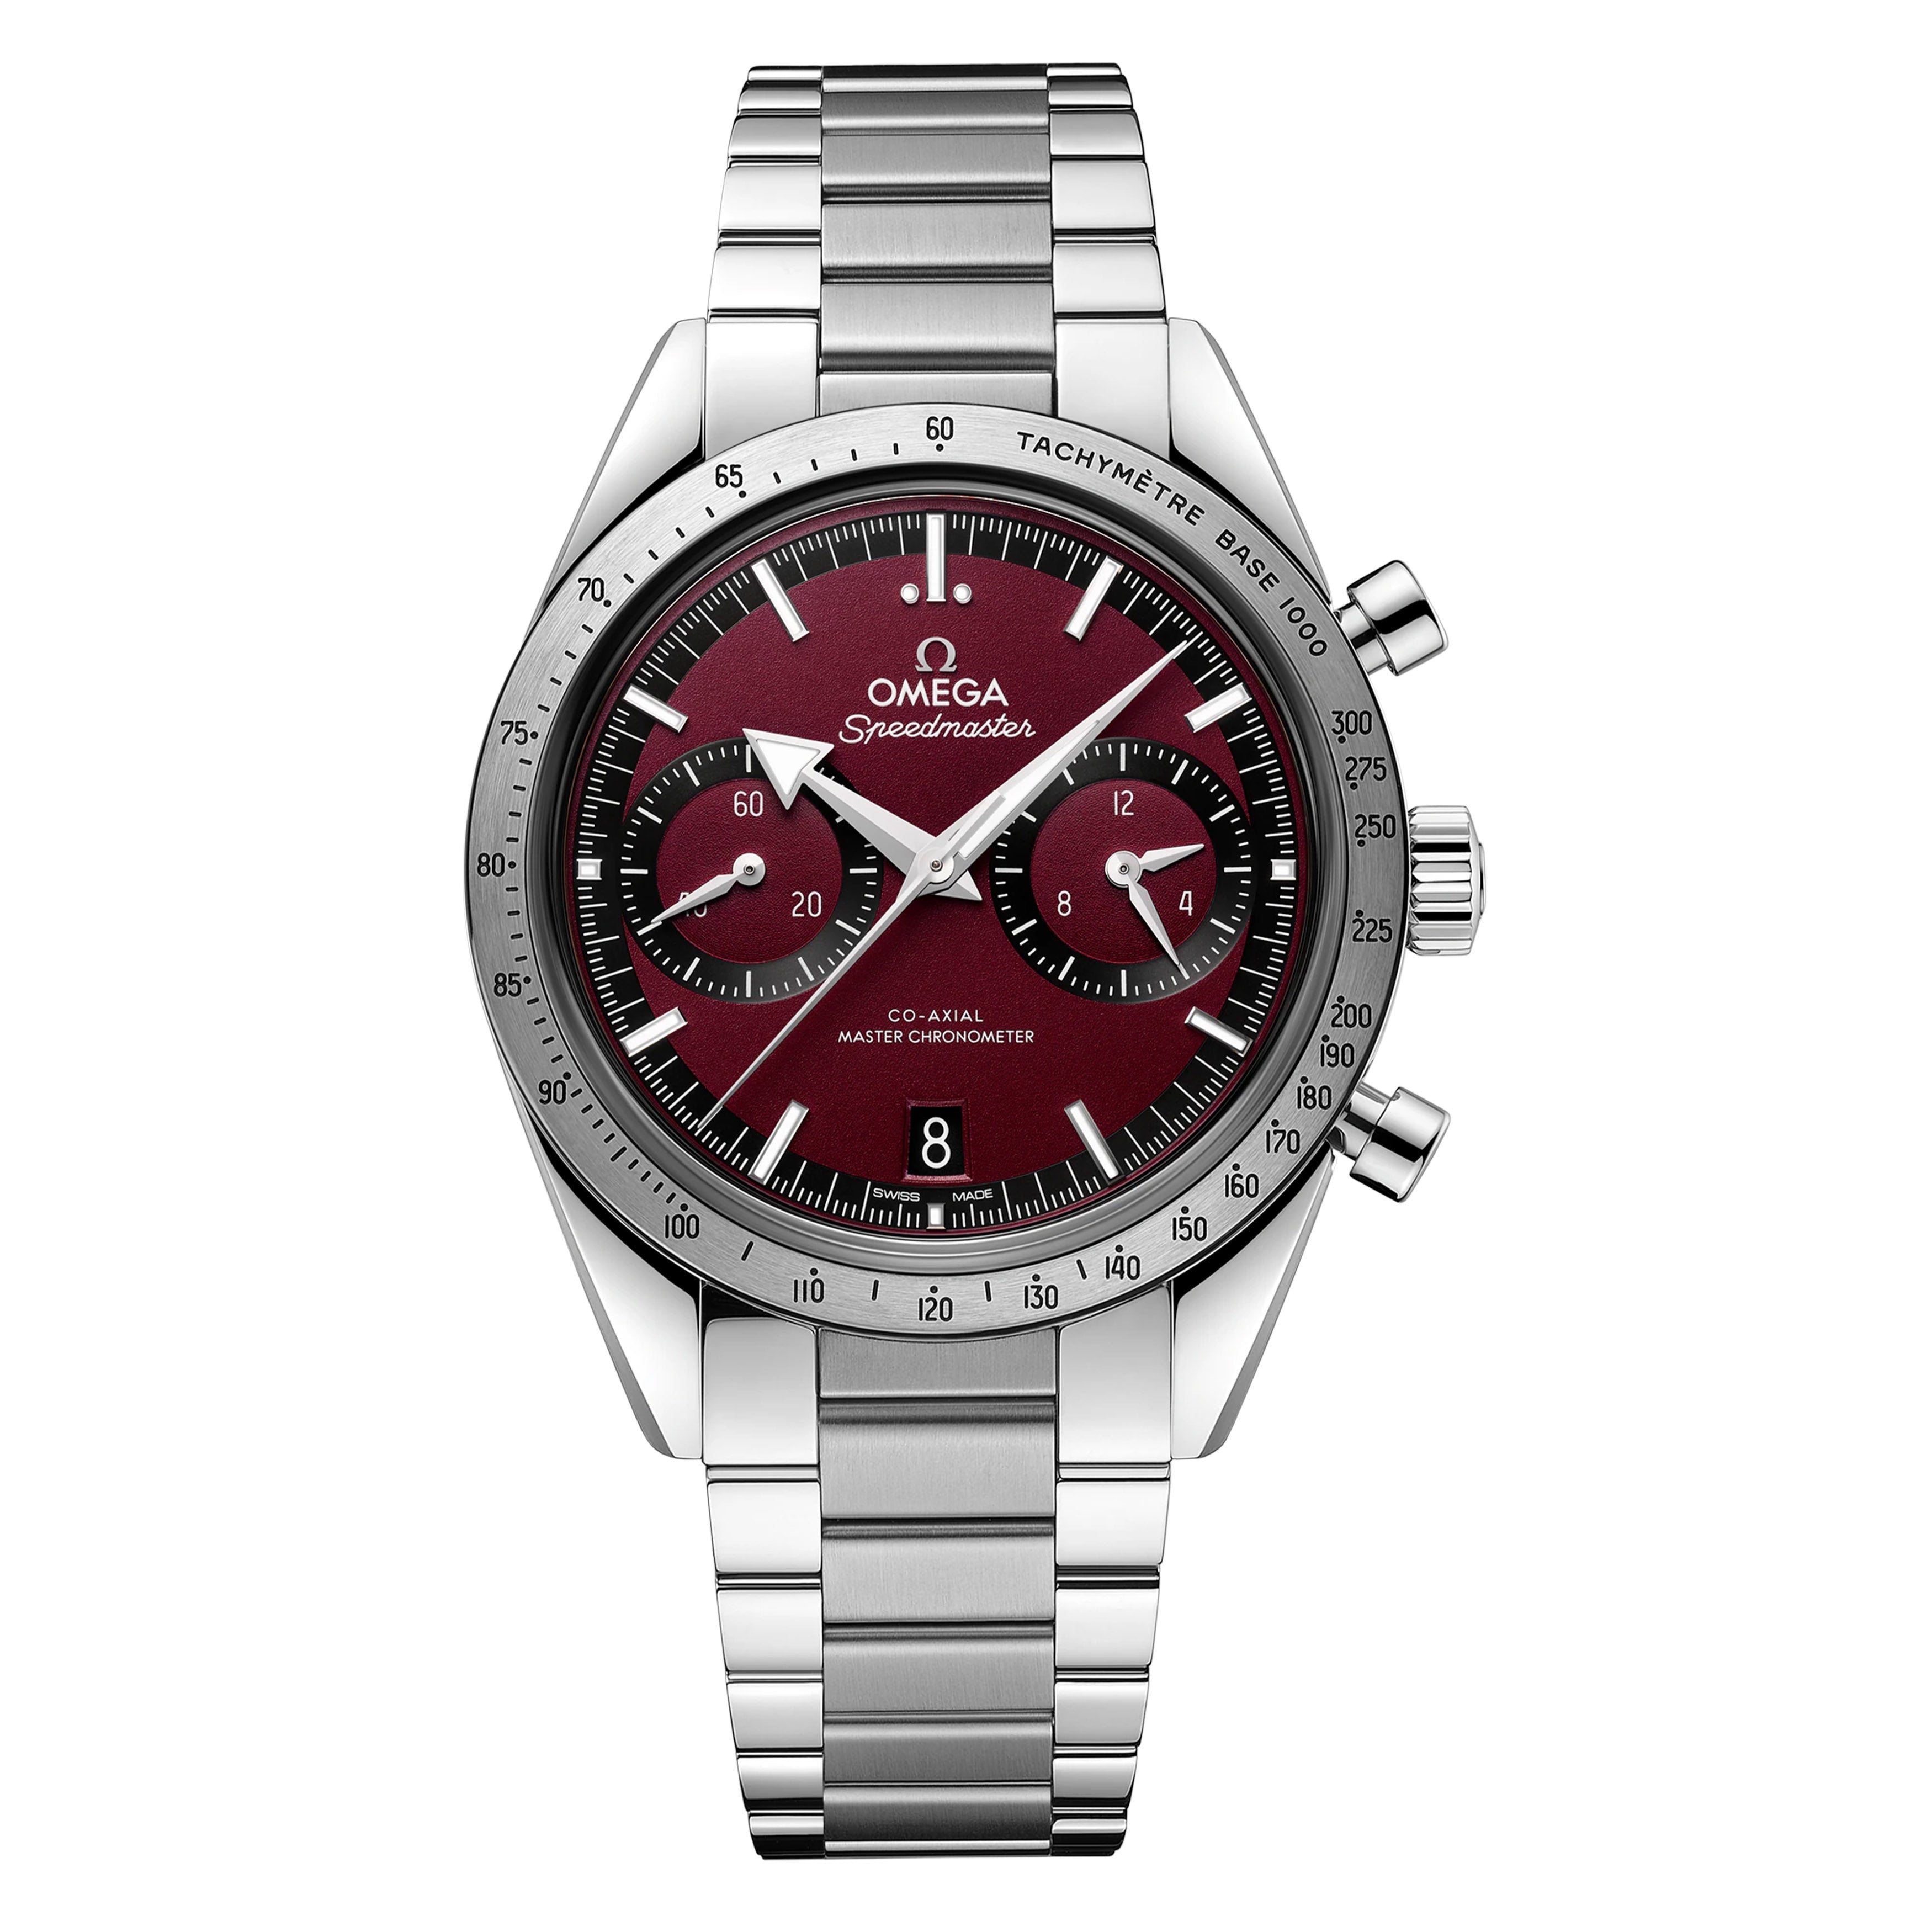 Omega Speedmaster Racing Automatic Chronograph Men's Watch  326.30.40.50.01.001 7612586233043 | eBay